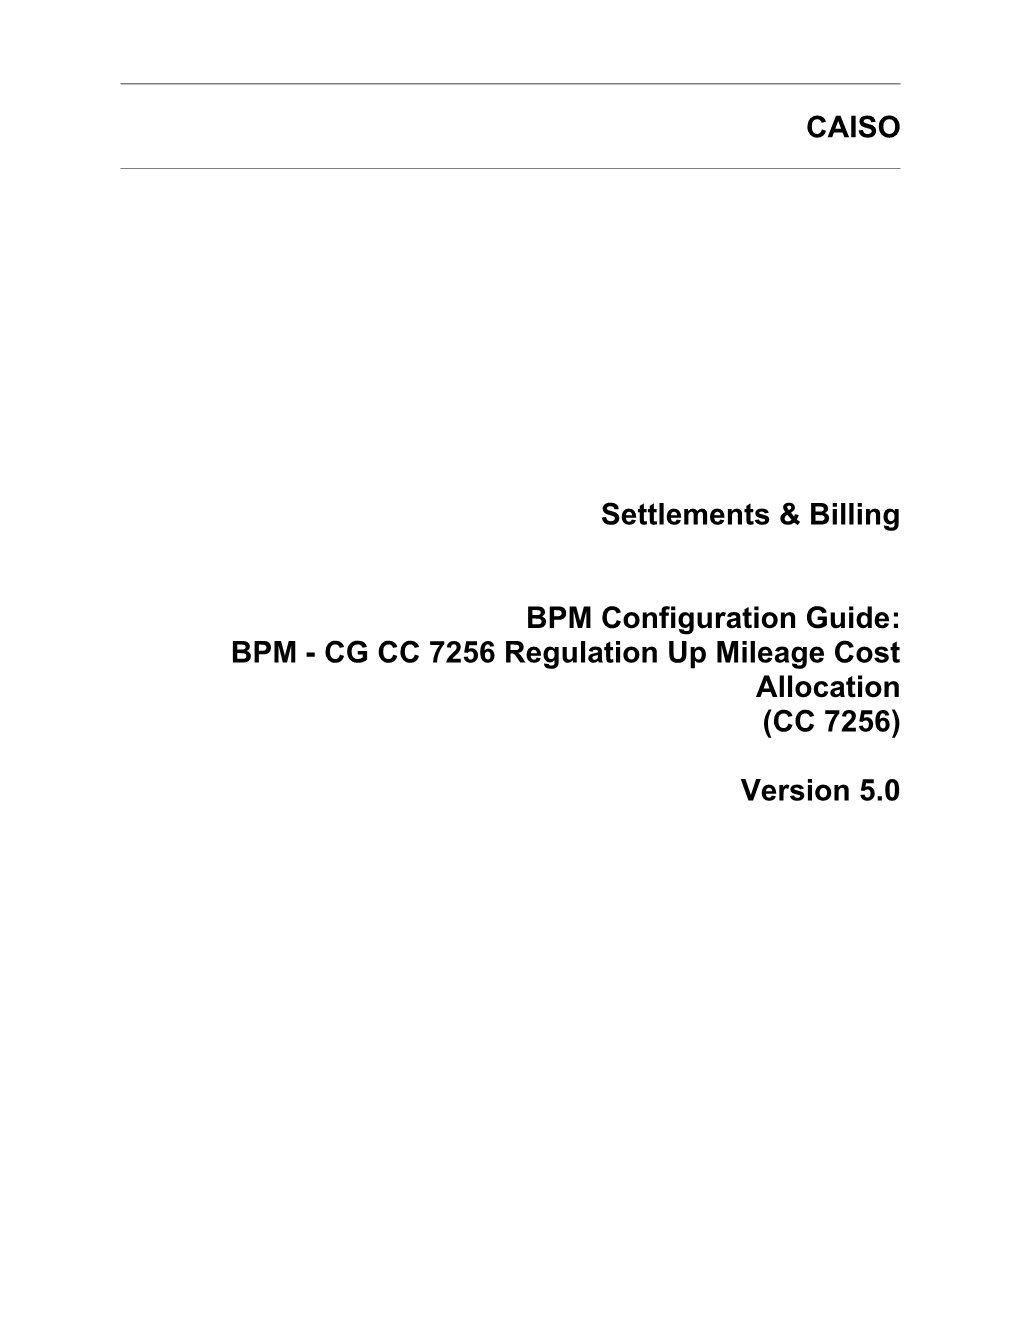 BPM - CG CC 7256 Regulation up Mileage Cost Allocation